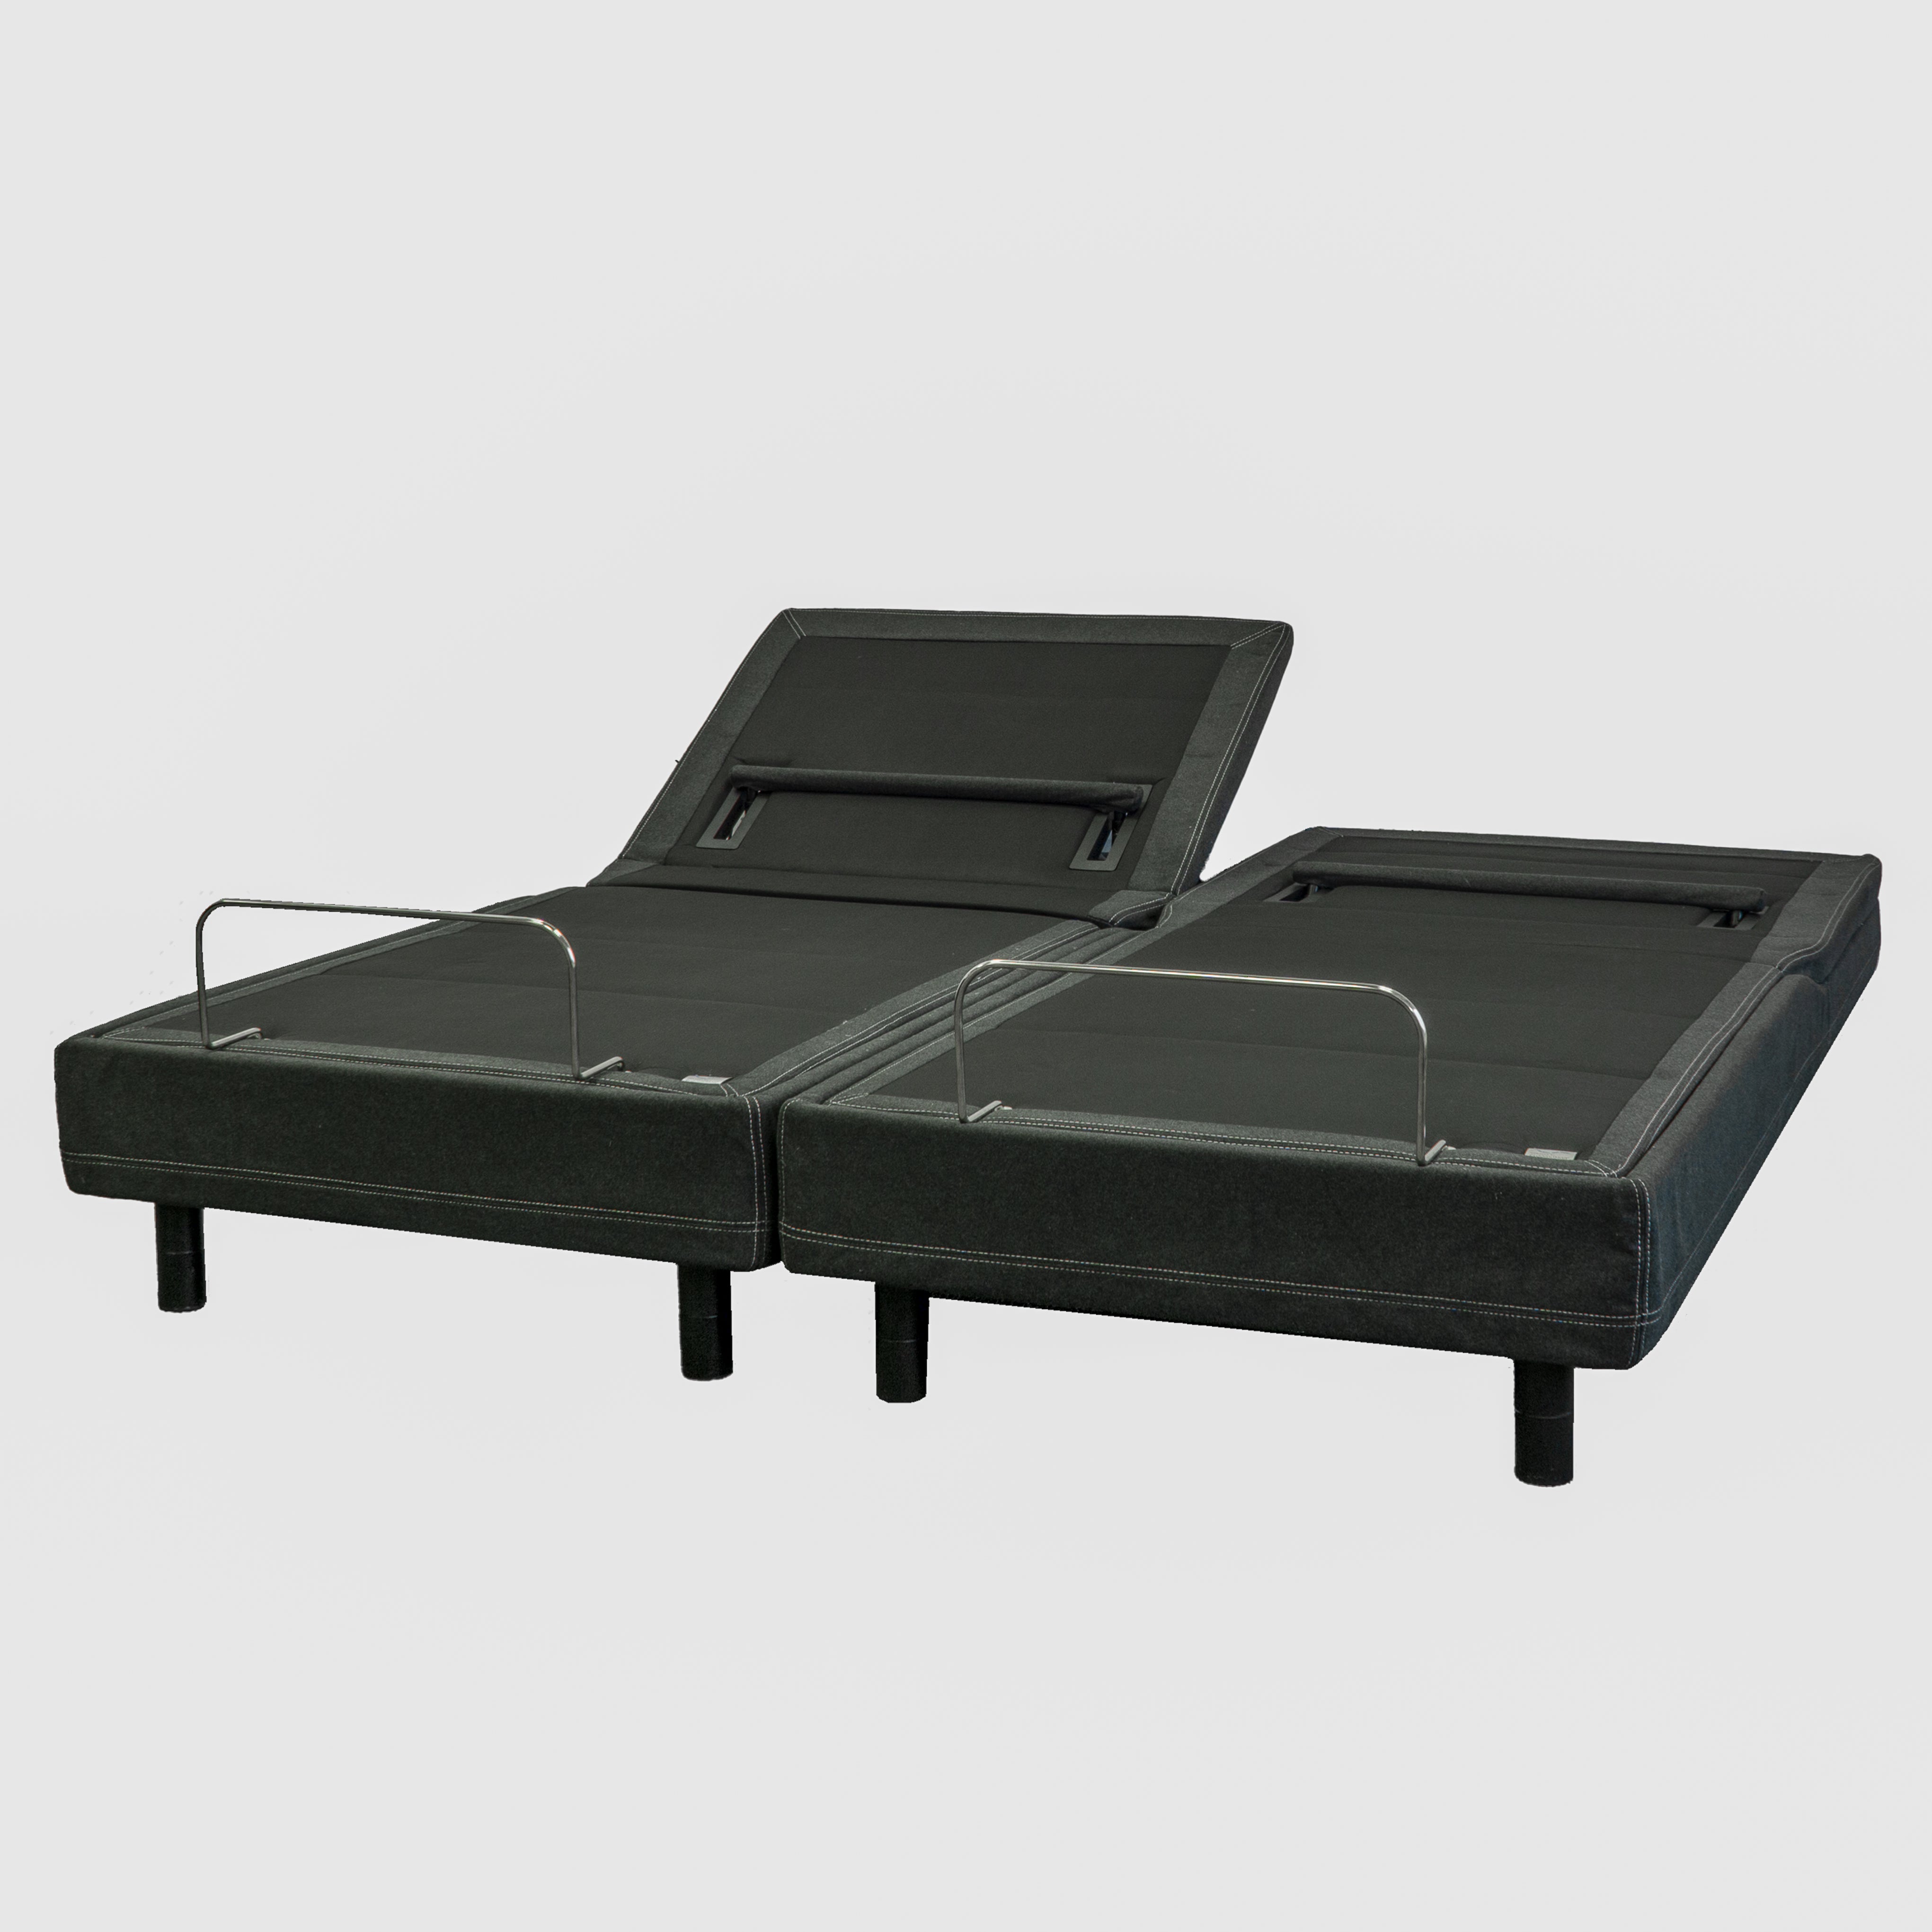 Demo Serta iComfort 1000 Split King Adjustable Bed Package